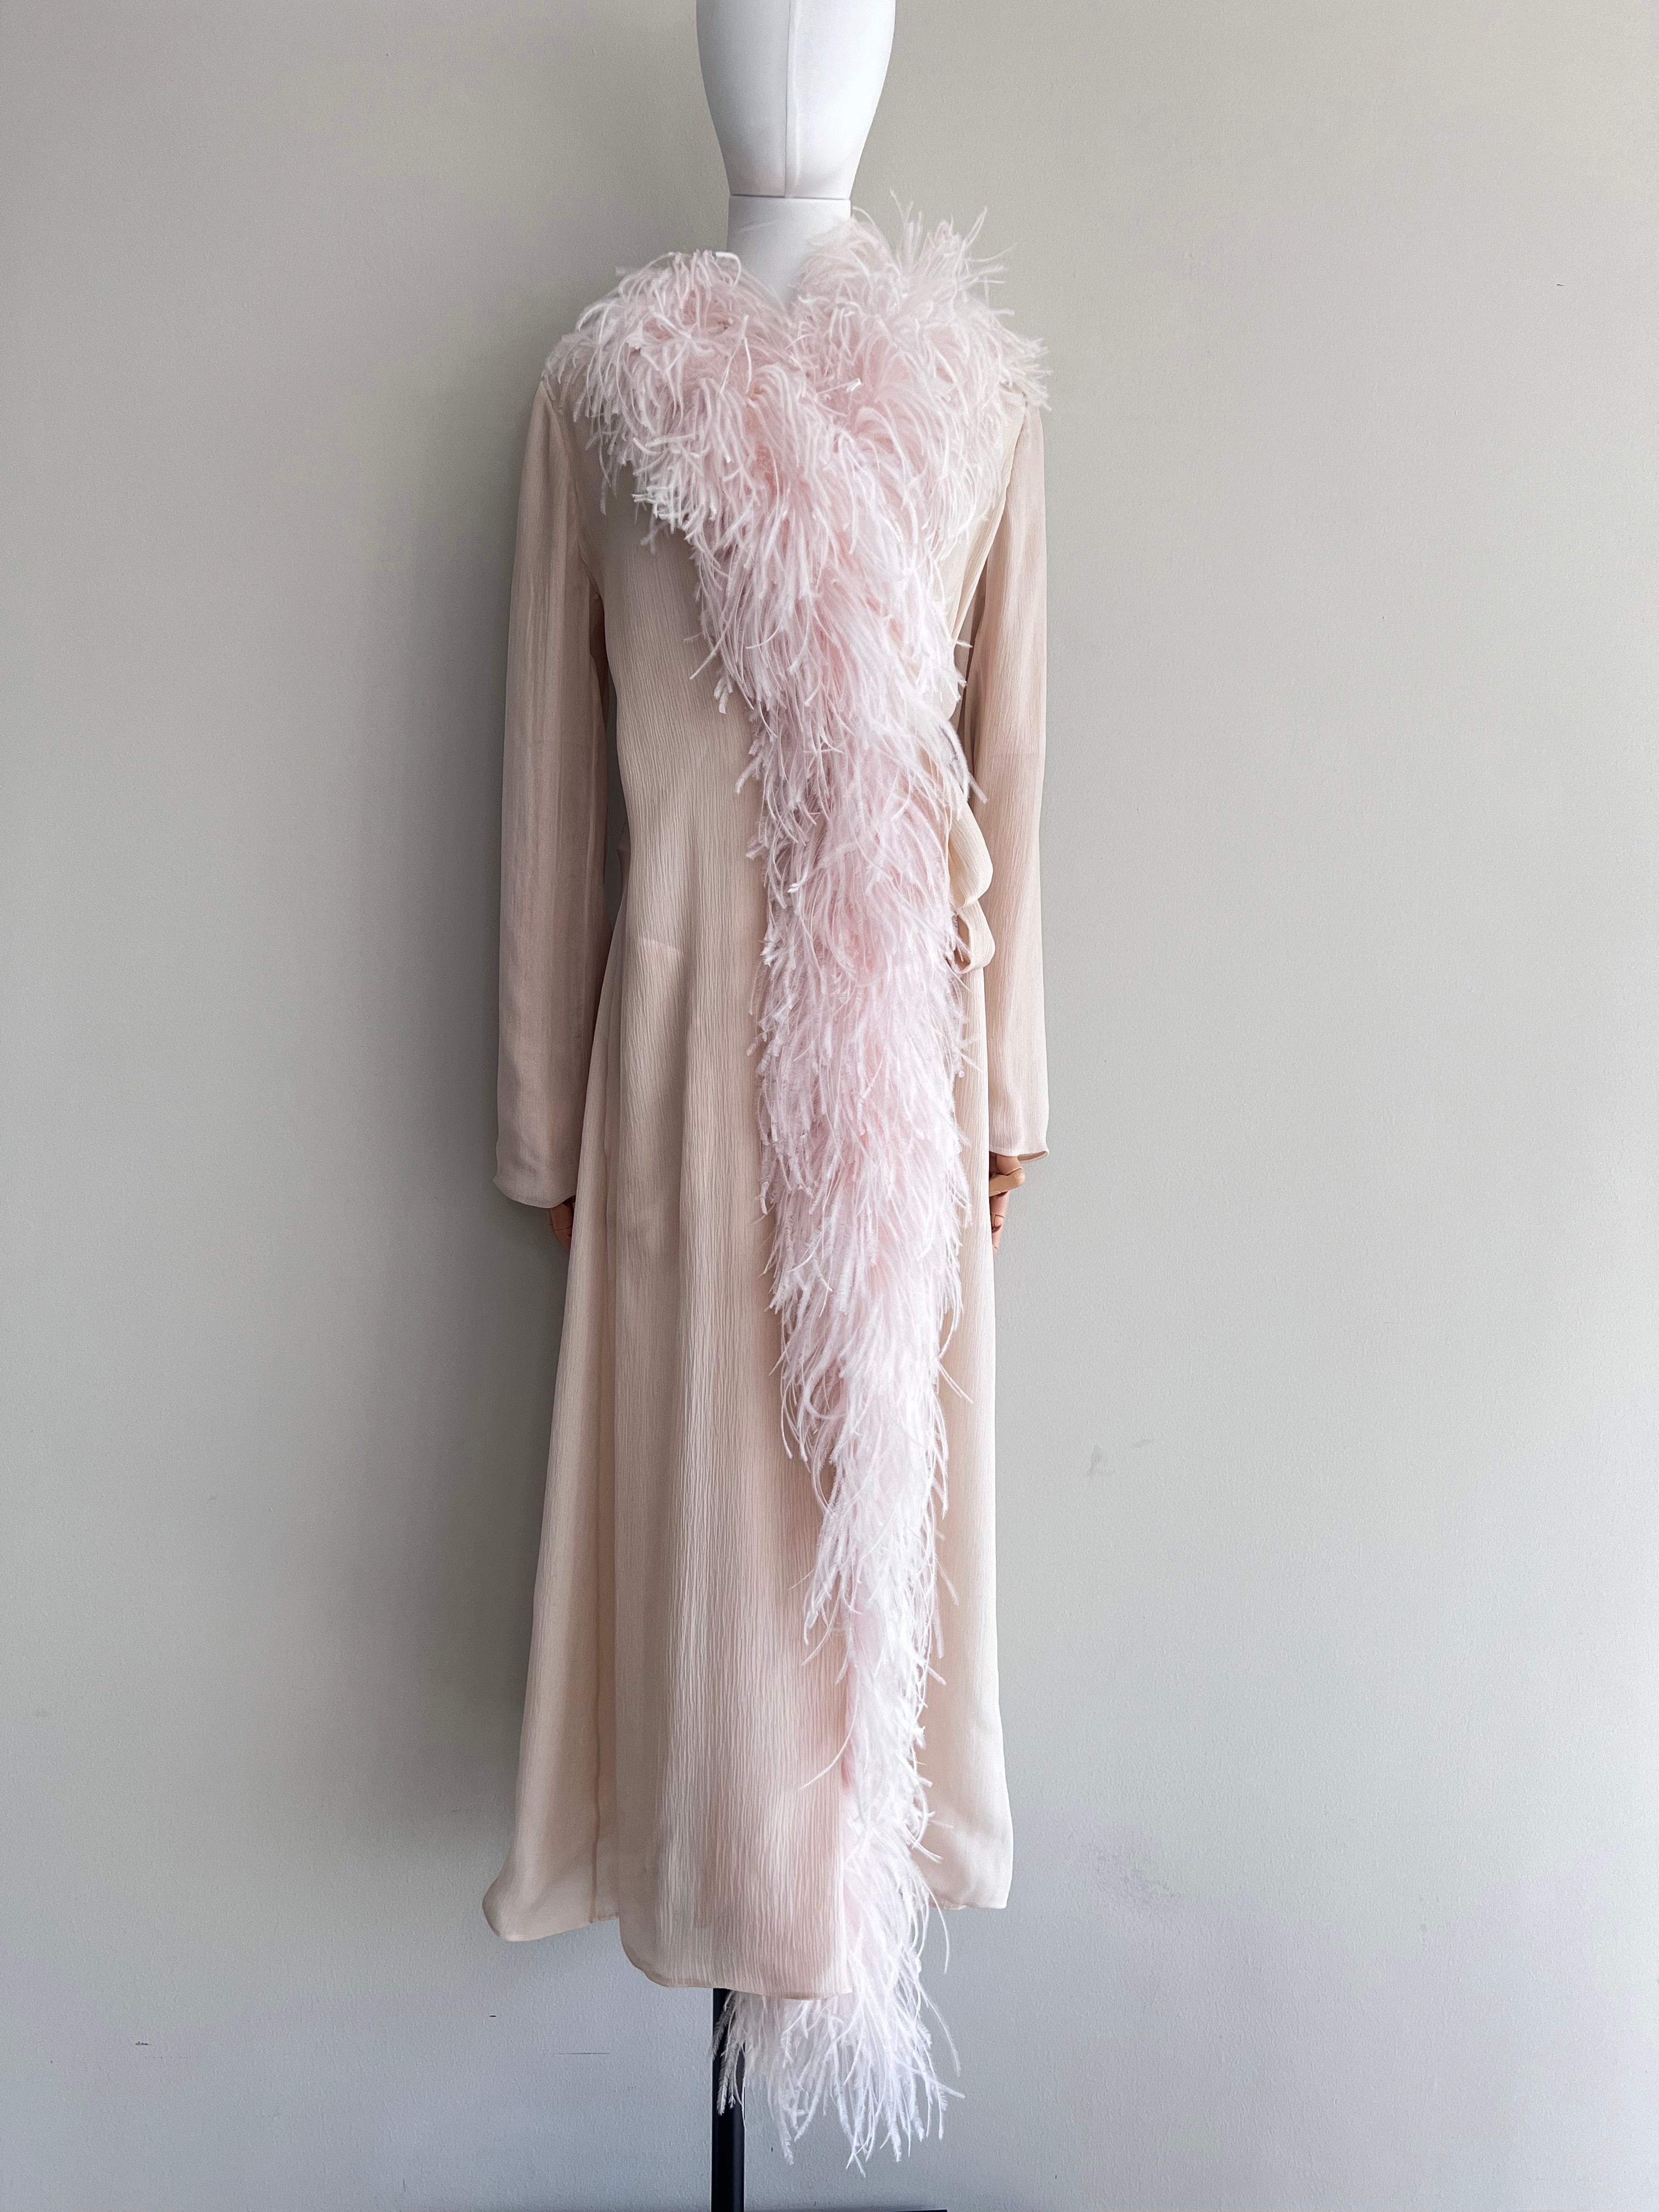 Soft peach satin robe dress with feathers - PRADA